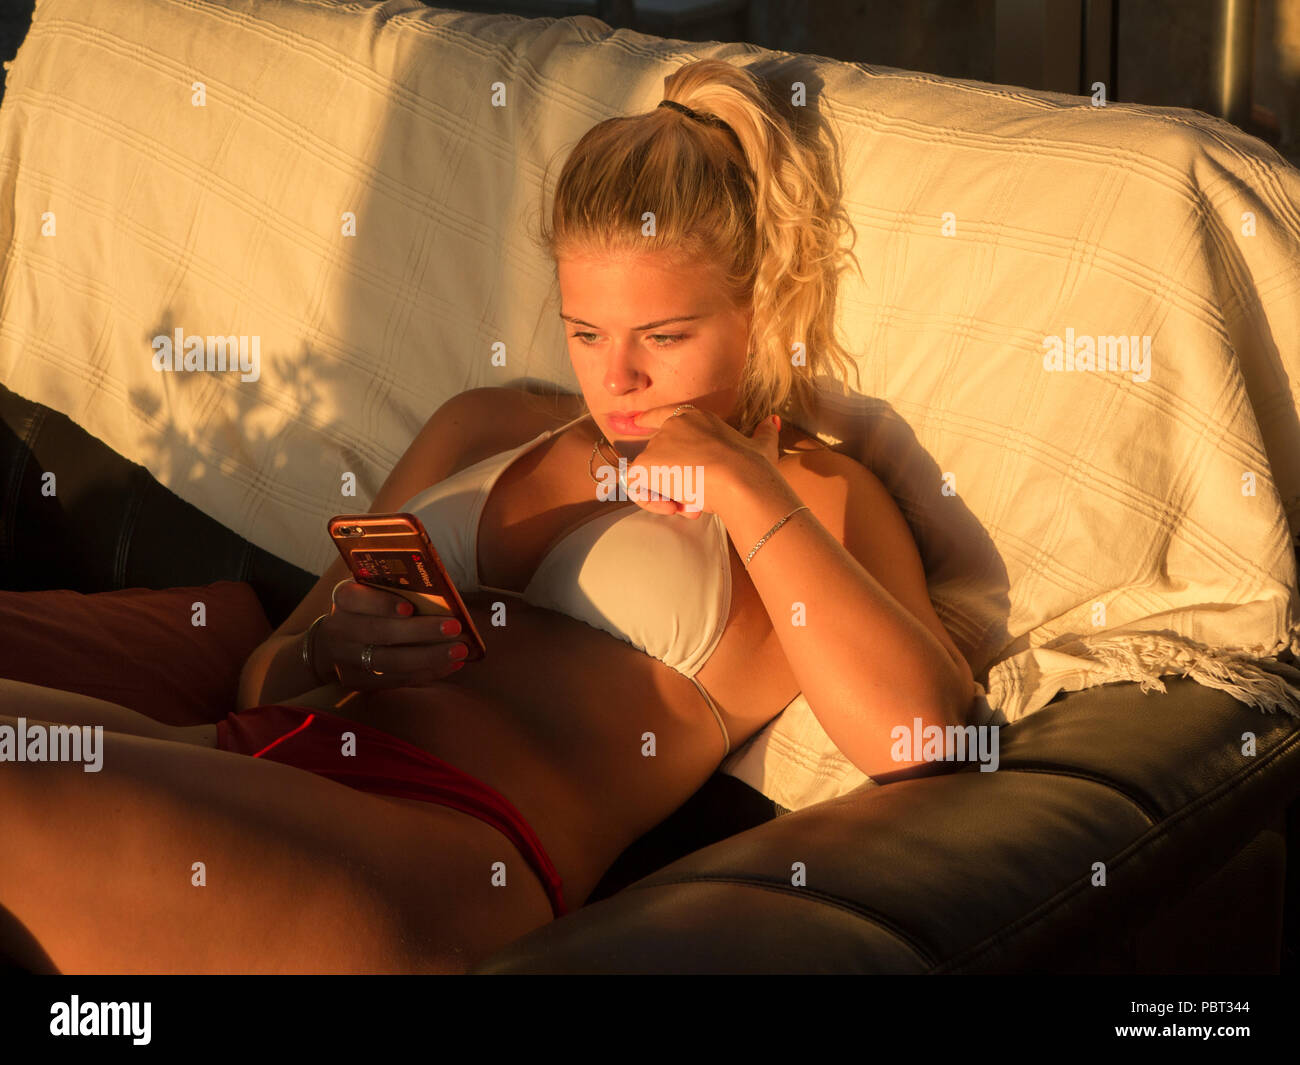 A pretty blonde girl checking her phone in a bikini inside a house Stock Photo